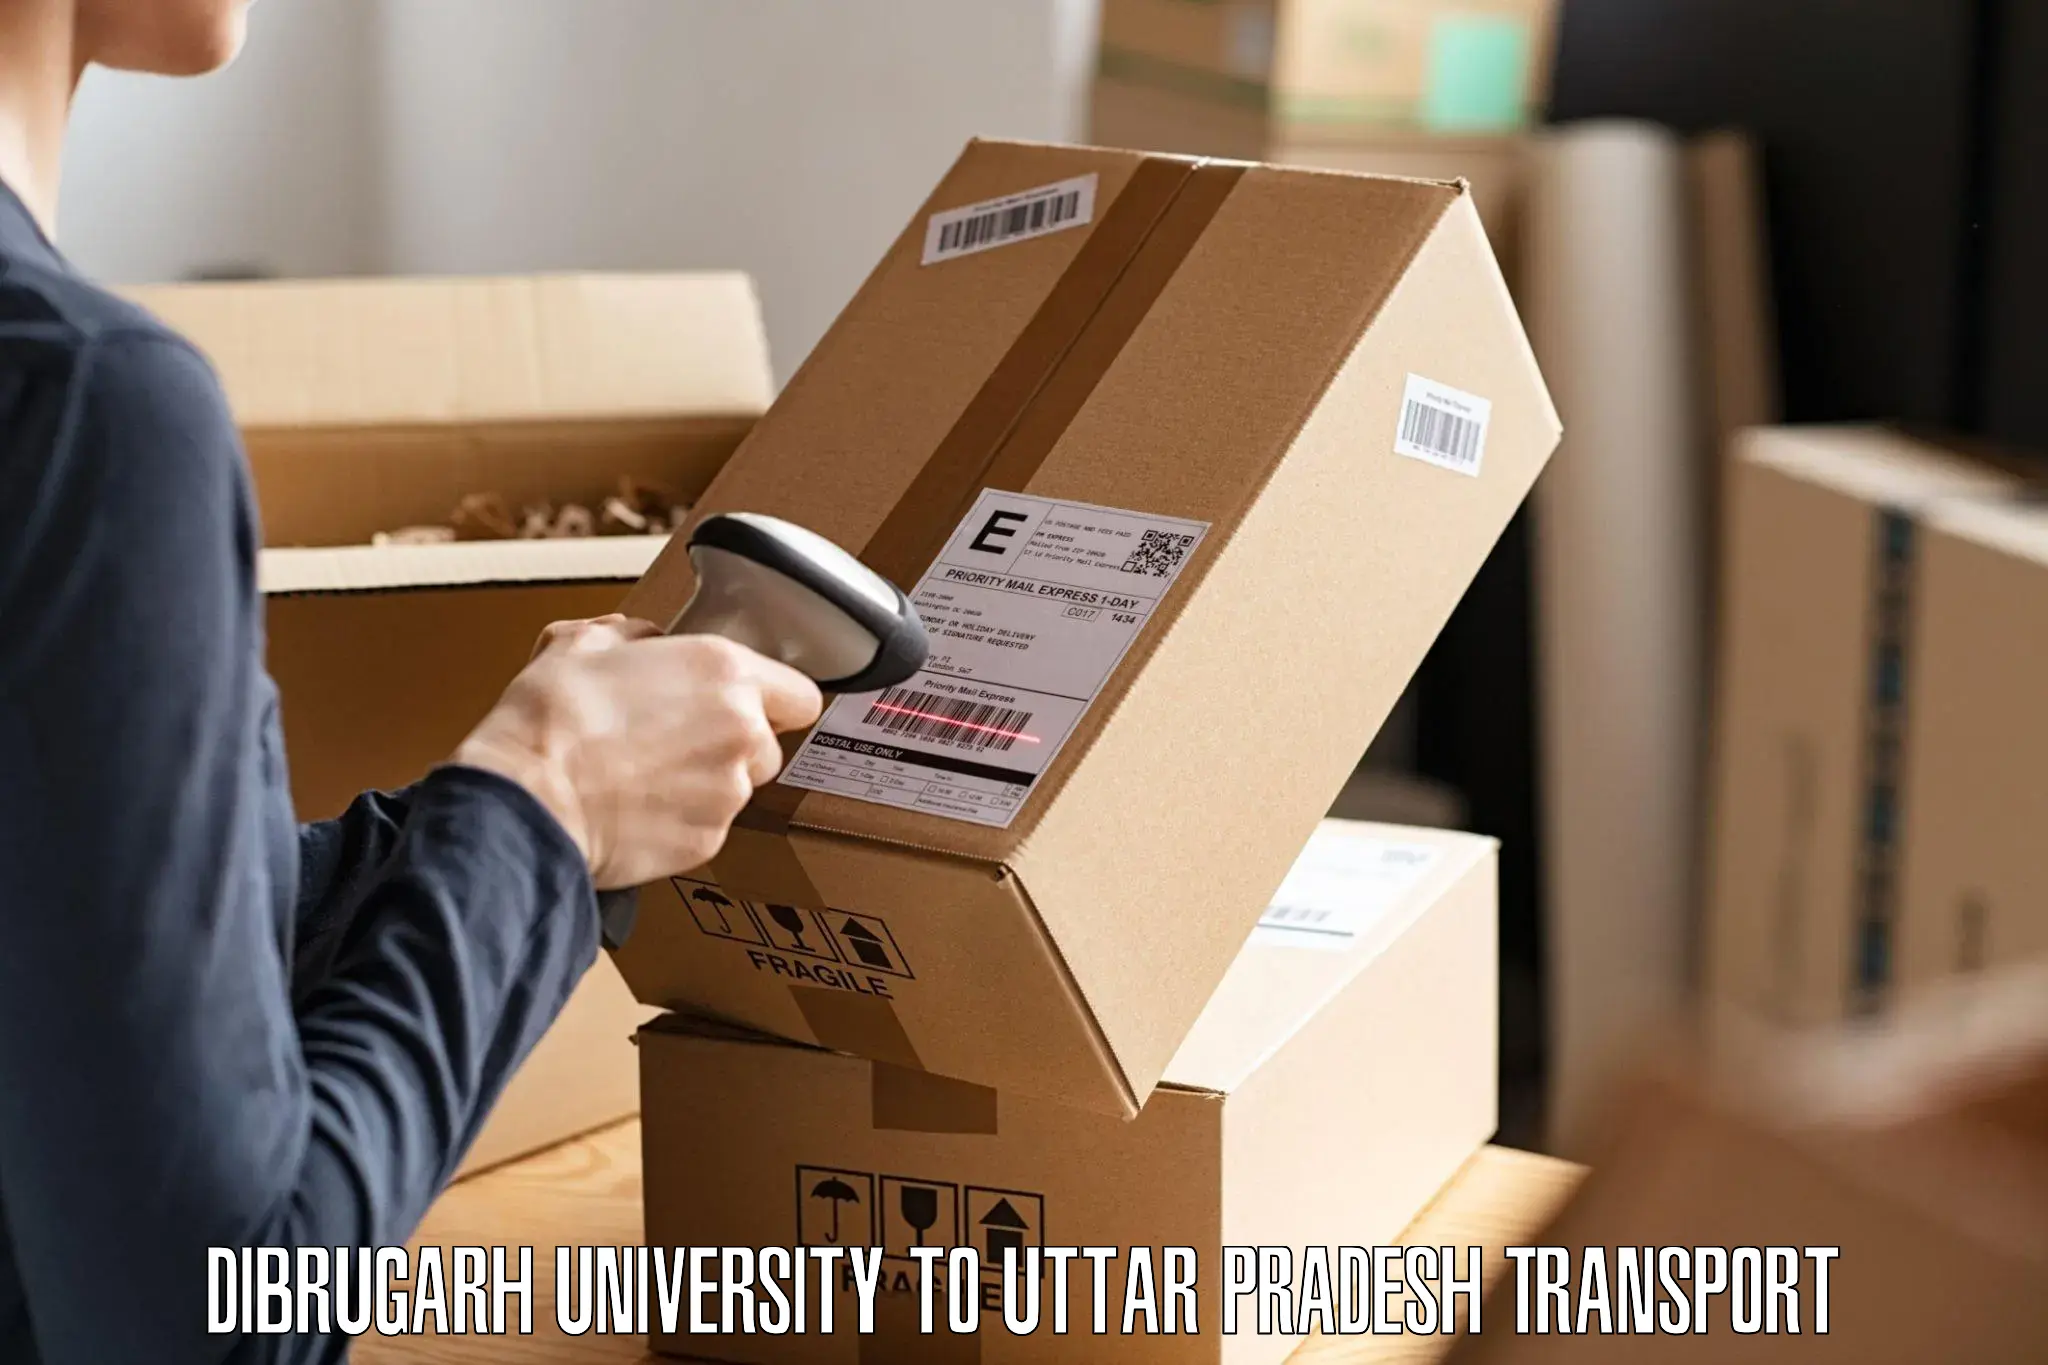 Daily transport service Dibrugarh University to Muzaffarnagar